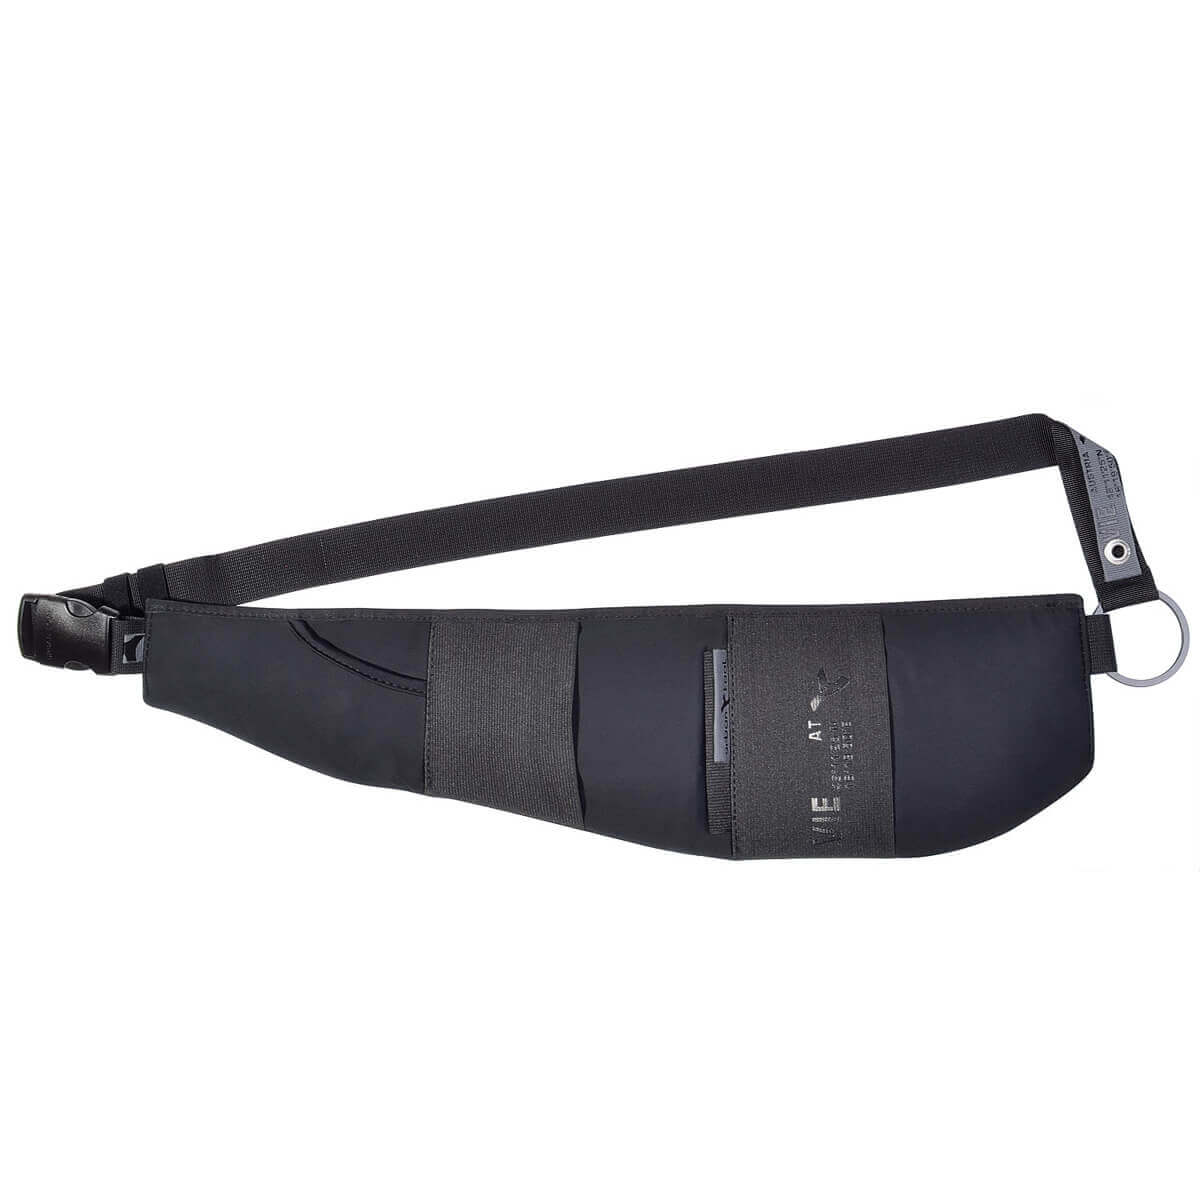 Phone Holder Travel Waist Bag Running Belt Bag Mobile Bag Money Bum Bags 